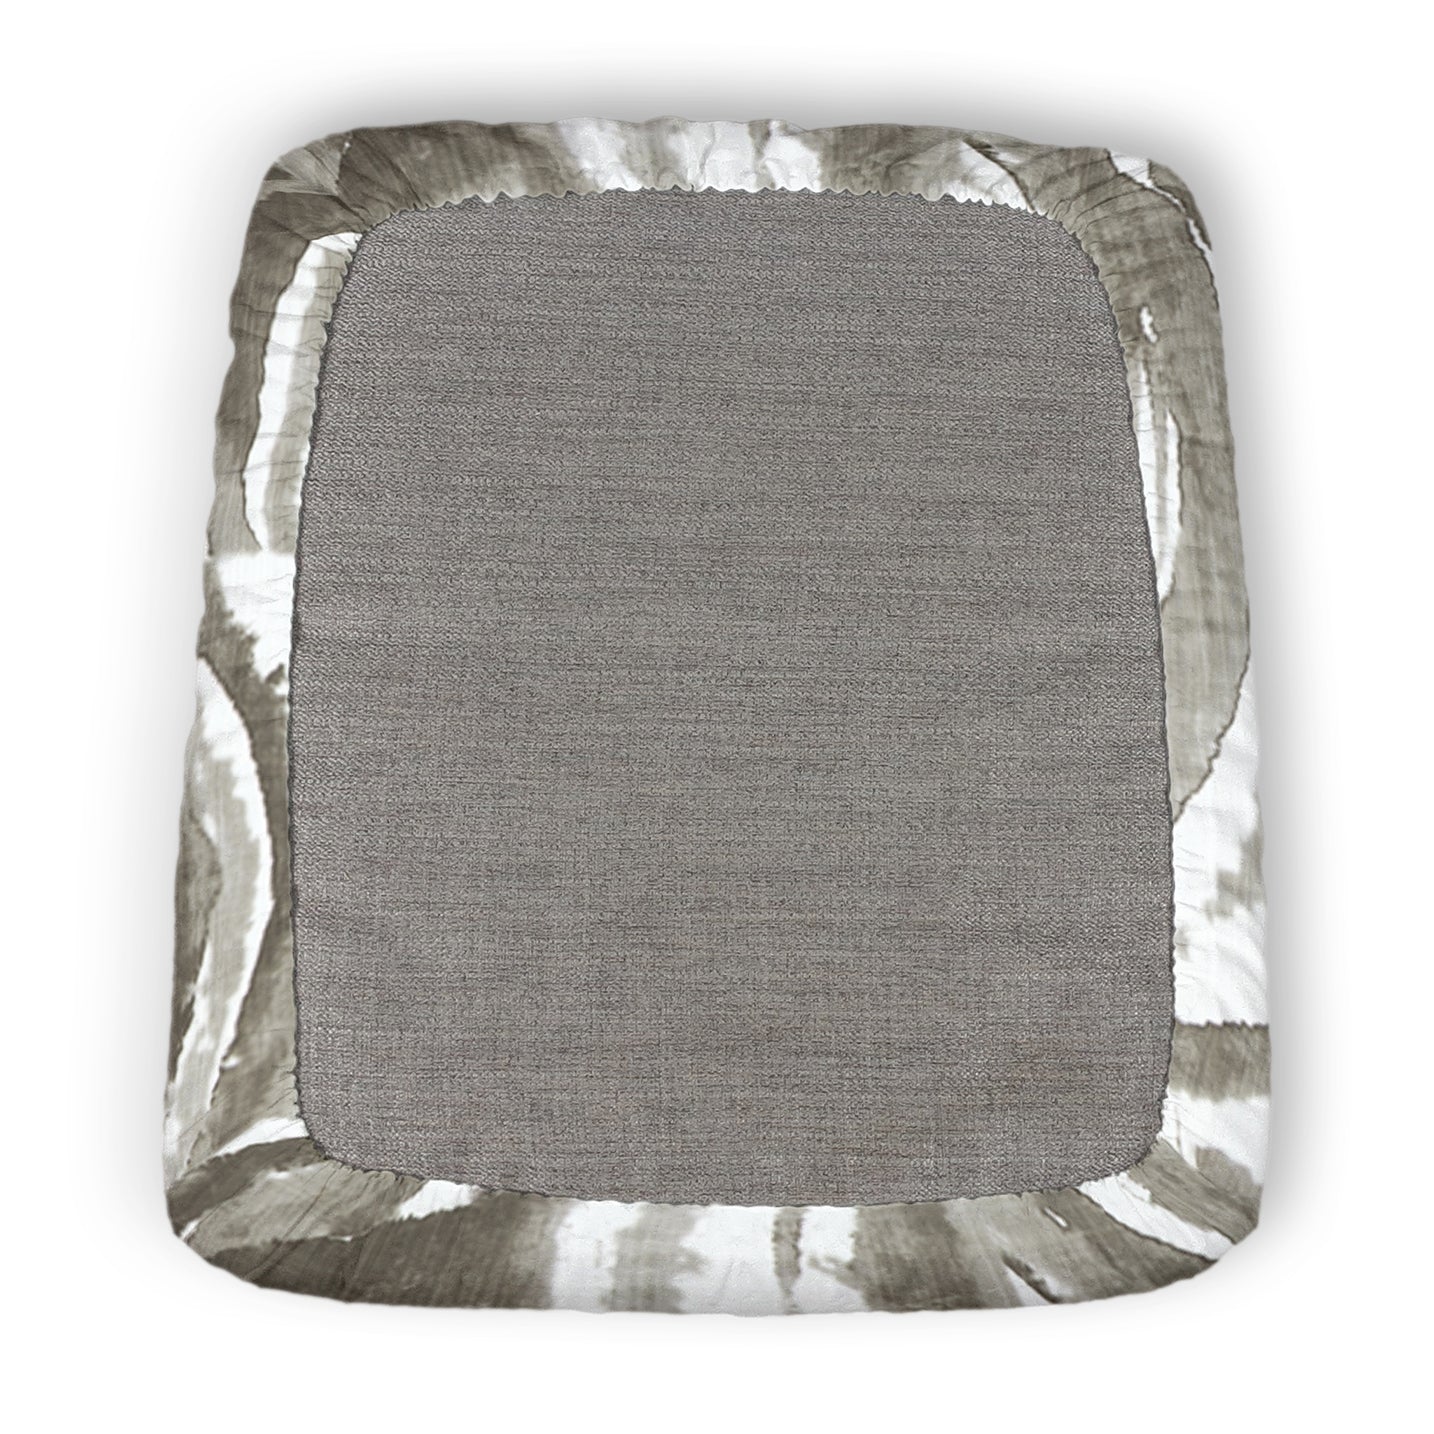 Fabric Sample Only 3x5 inch - Arno Slub